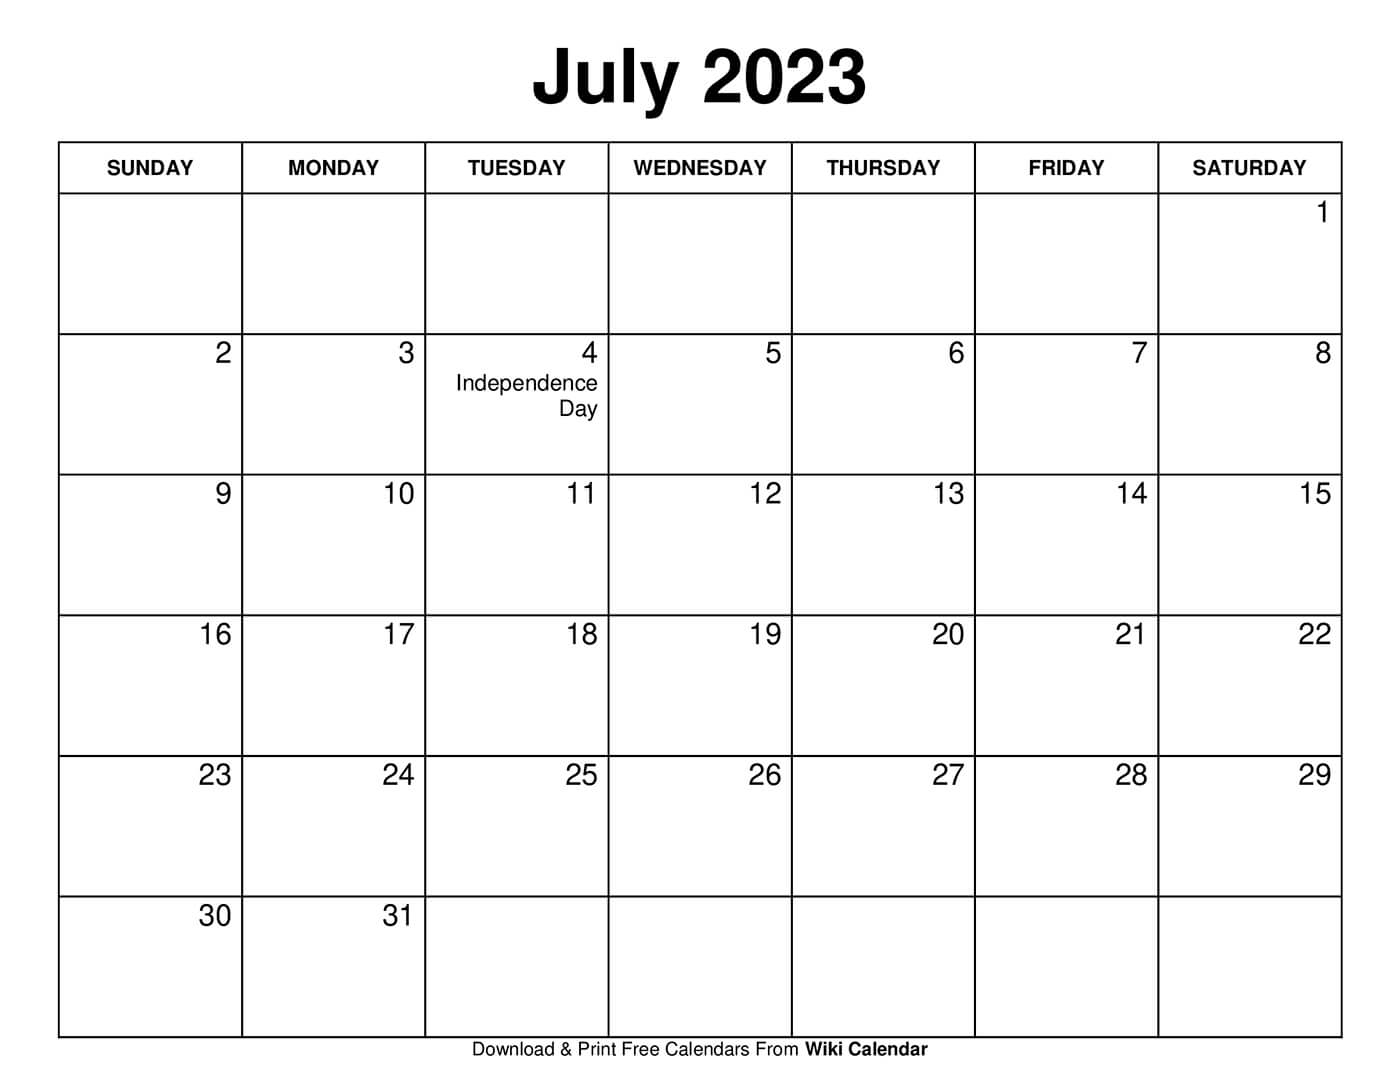 Free Printable July 2023 Calendars